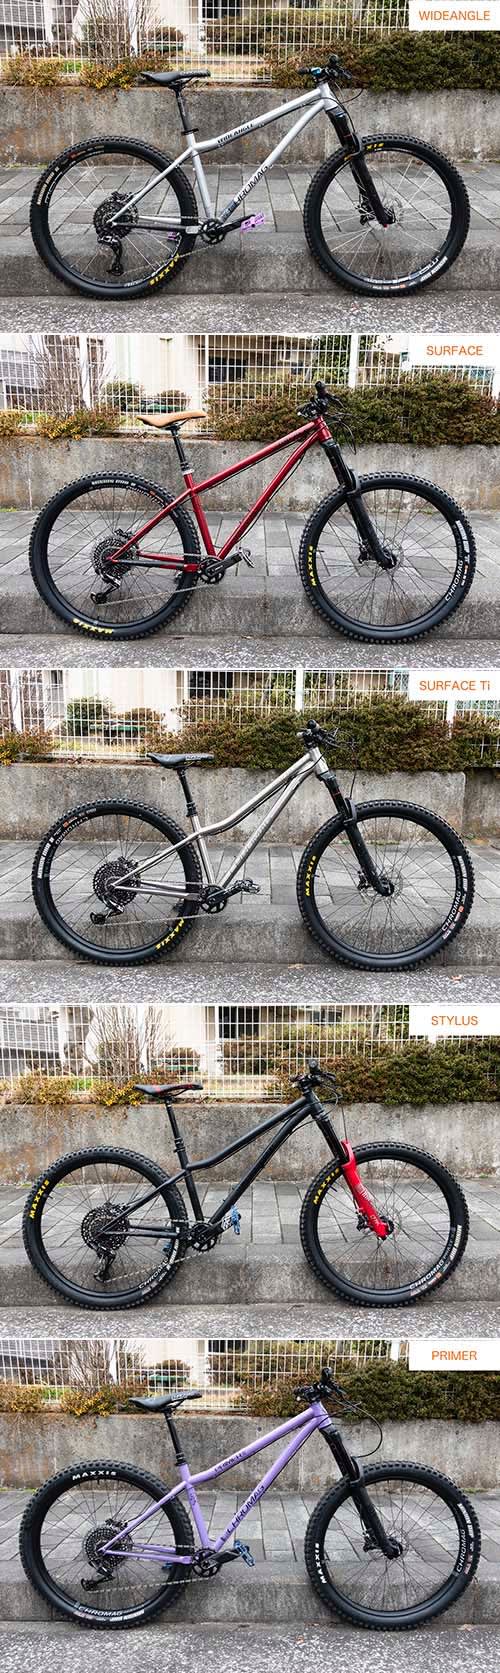 Chromag 試乗 - komezouの写真と自転車生活